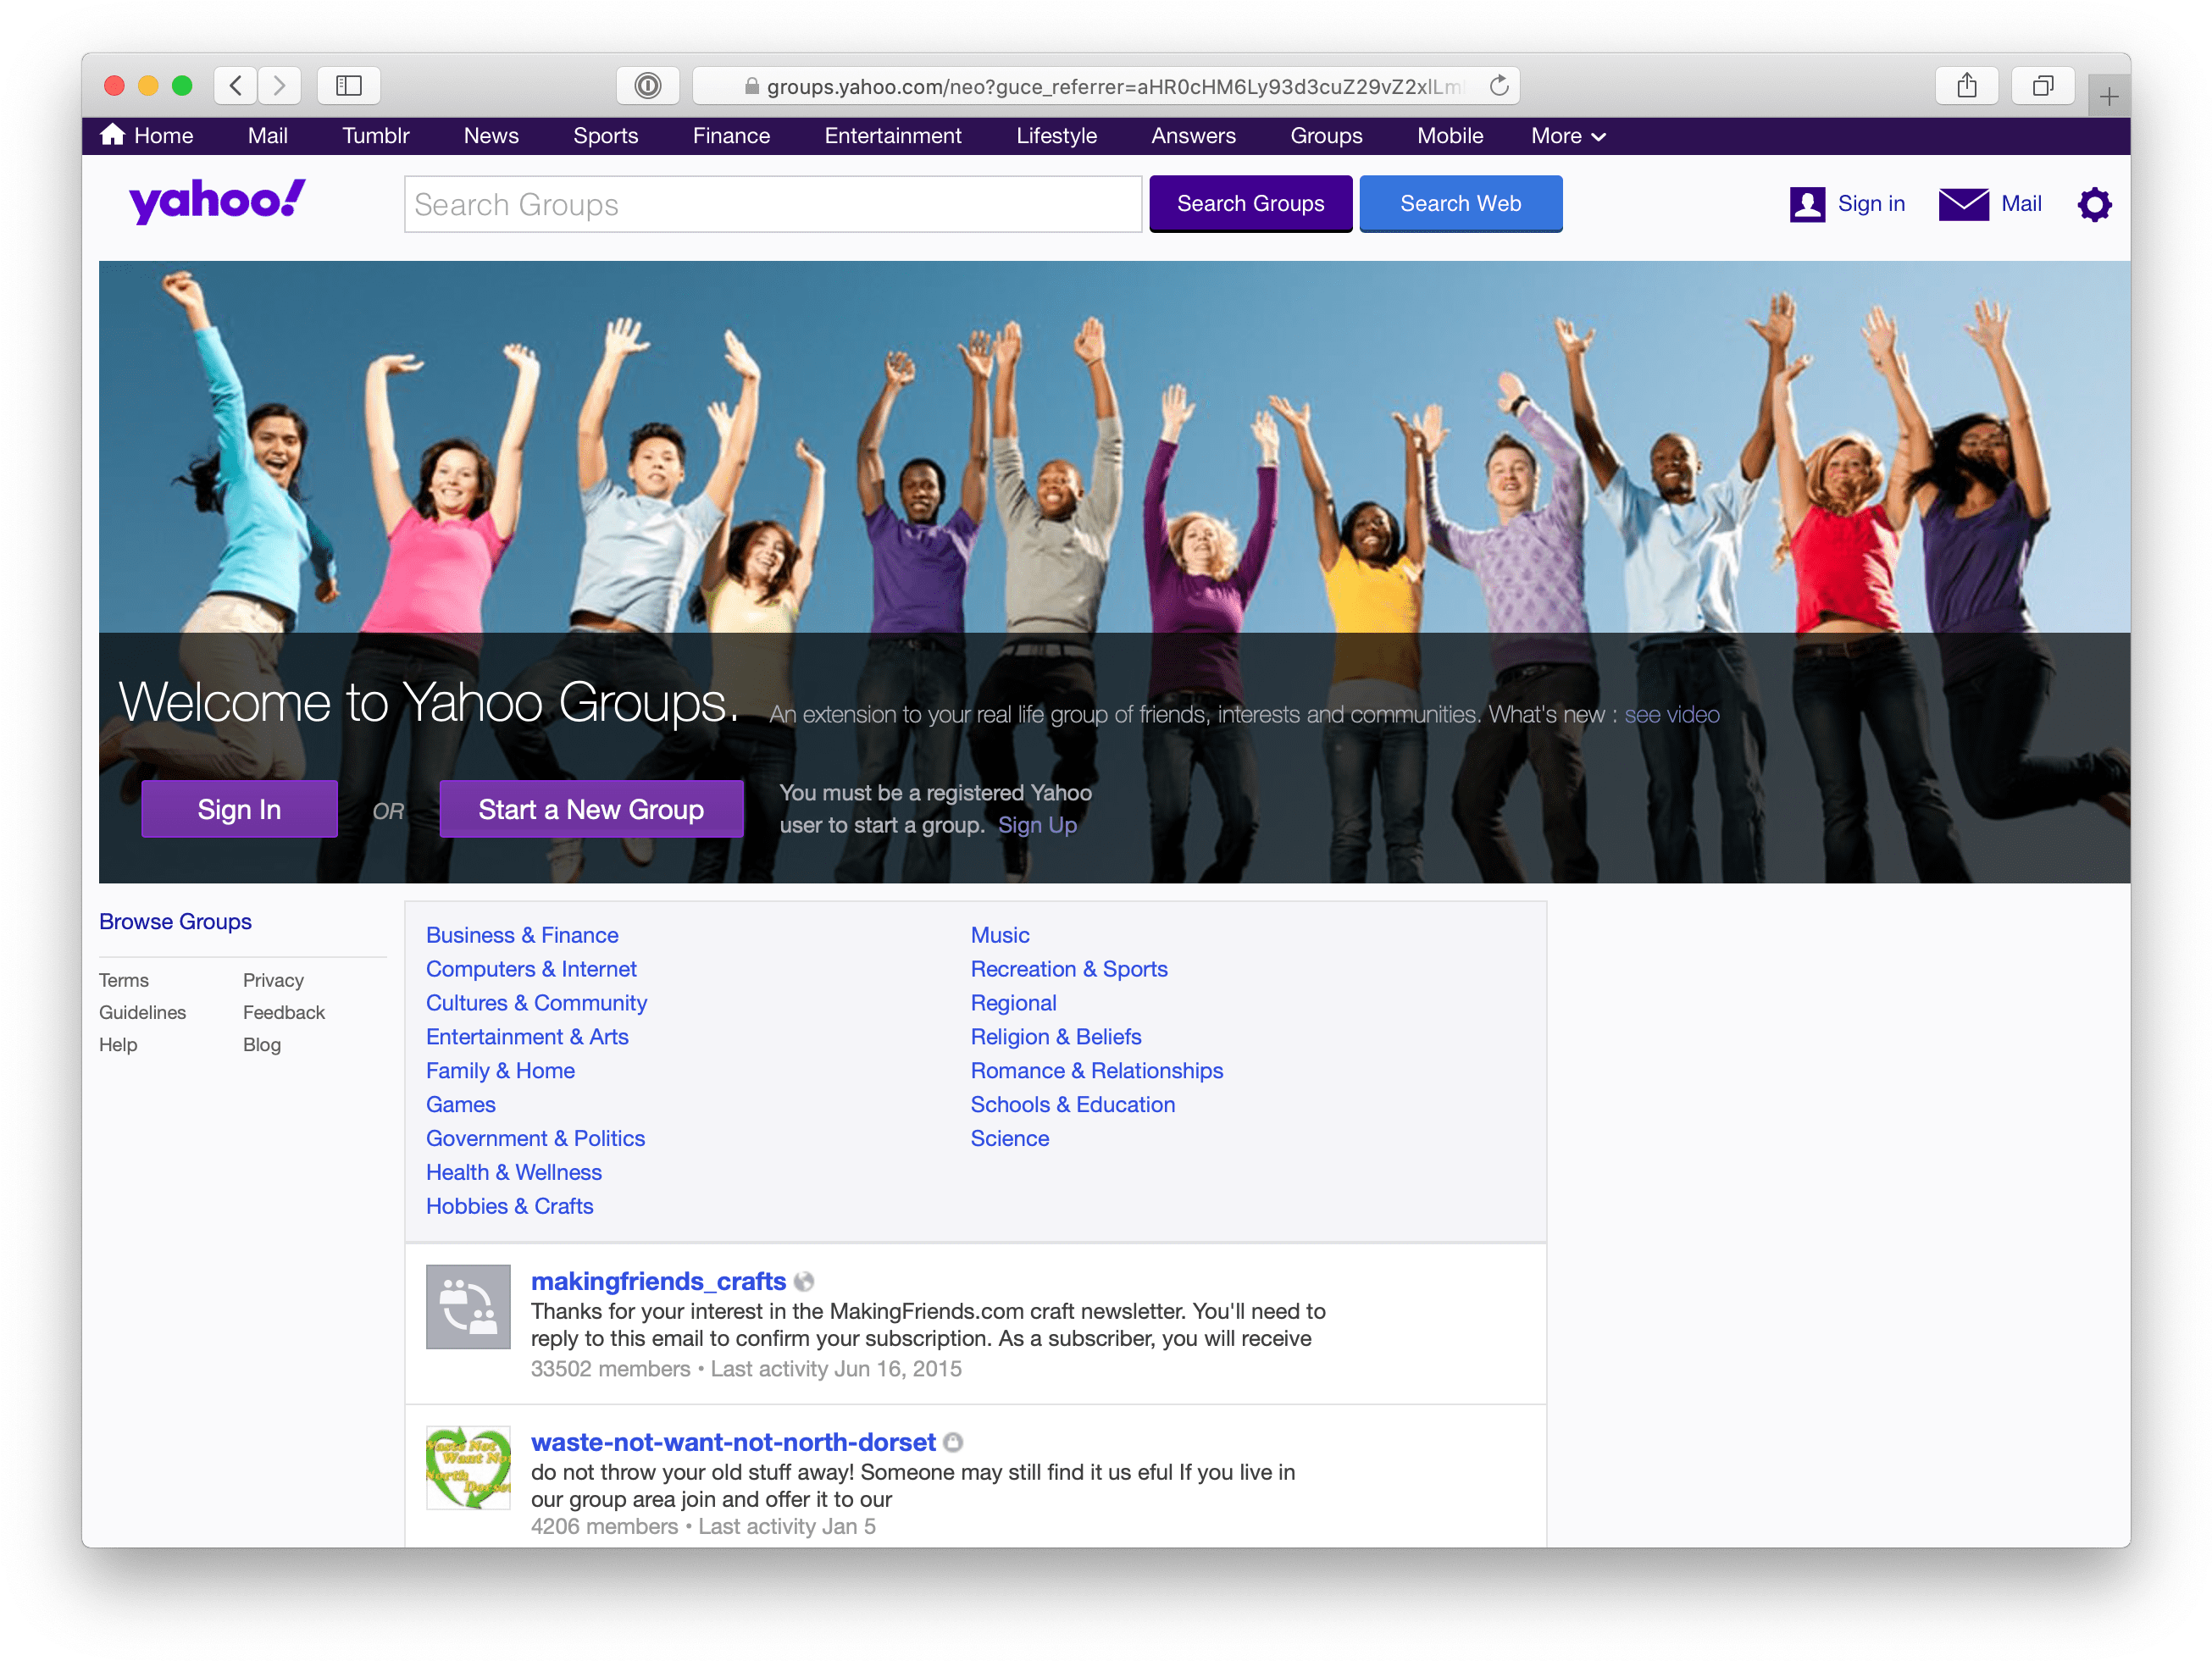 Diverse Group Celebrating Yahoo Groups